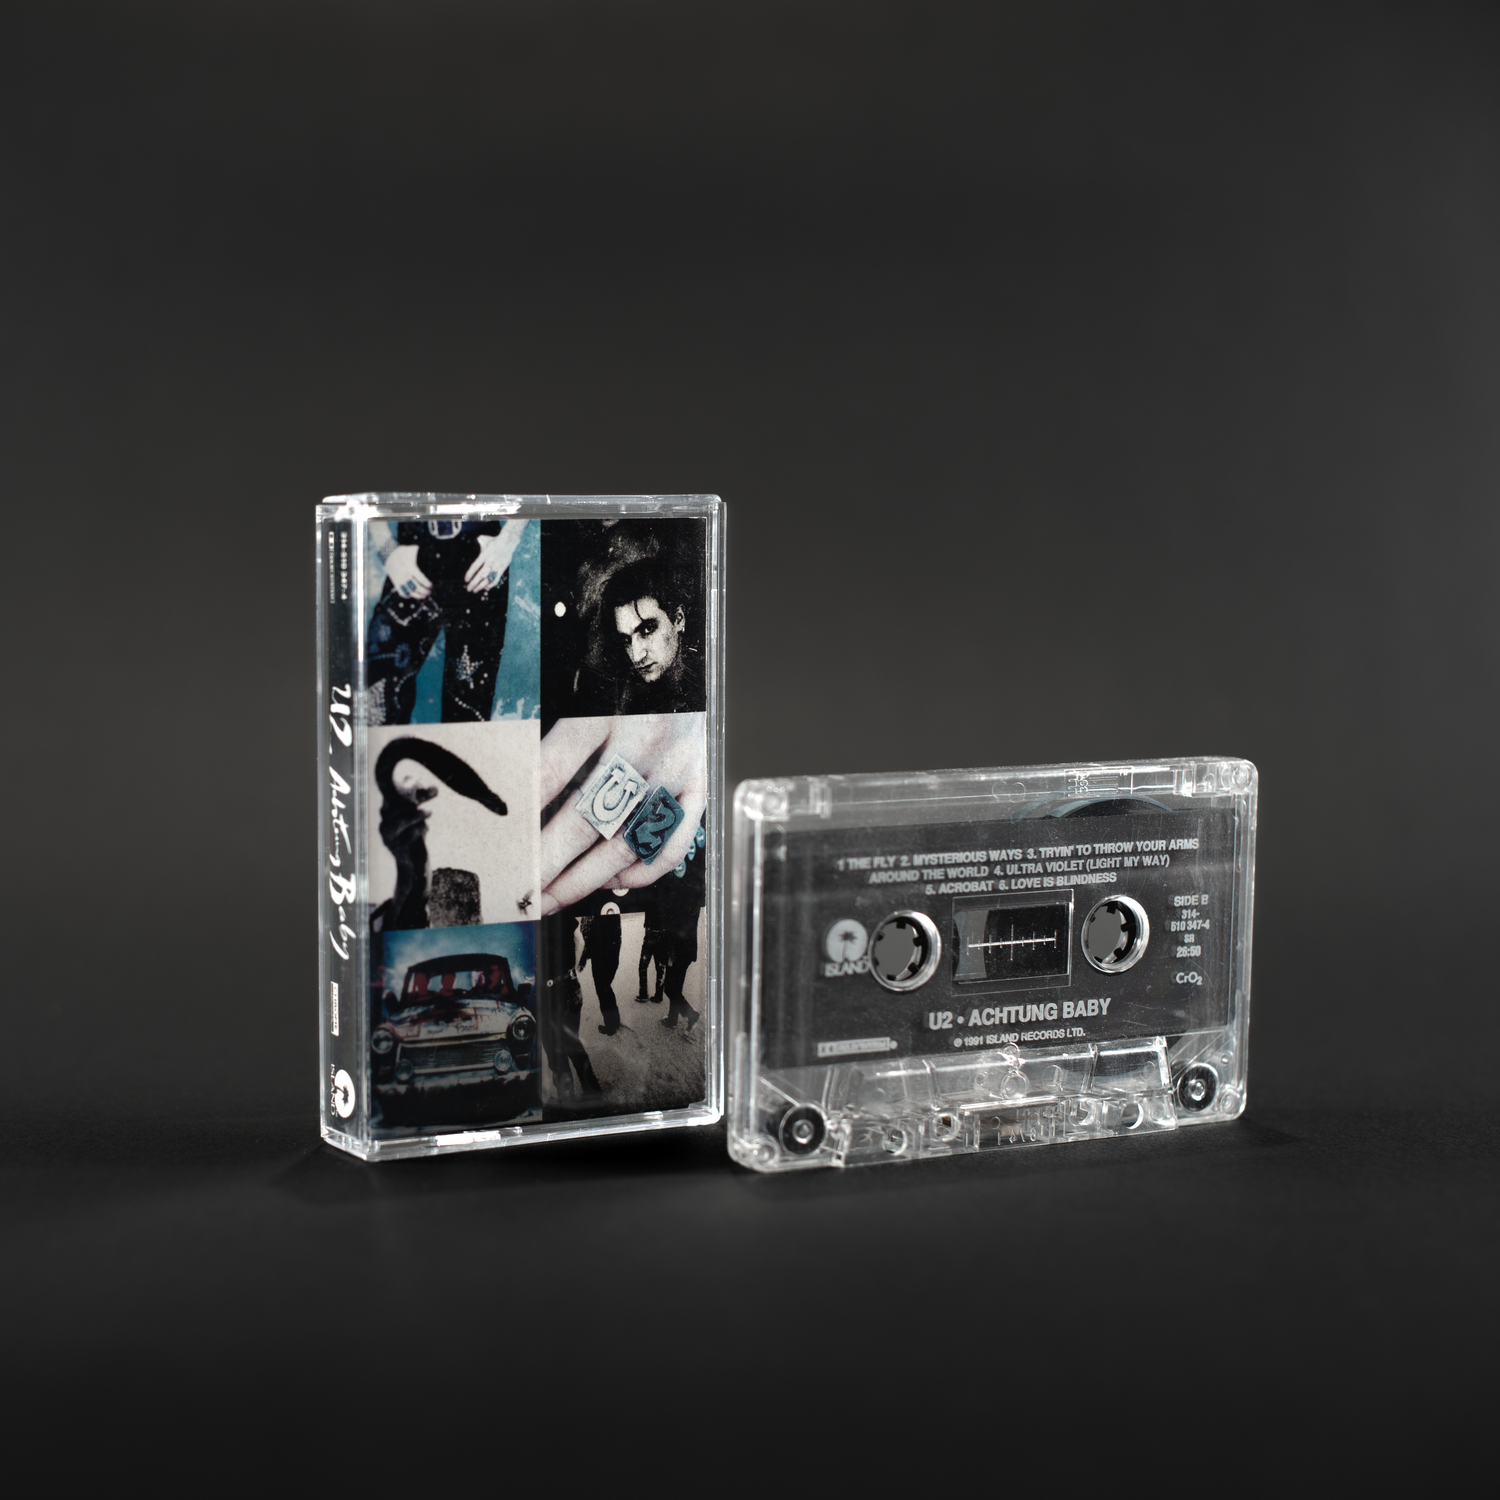 U2 - Achtung Baby - Cassette Vintage